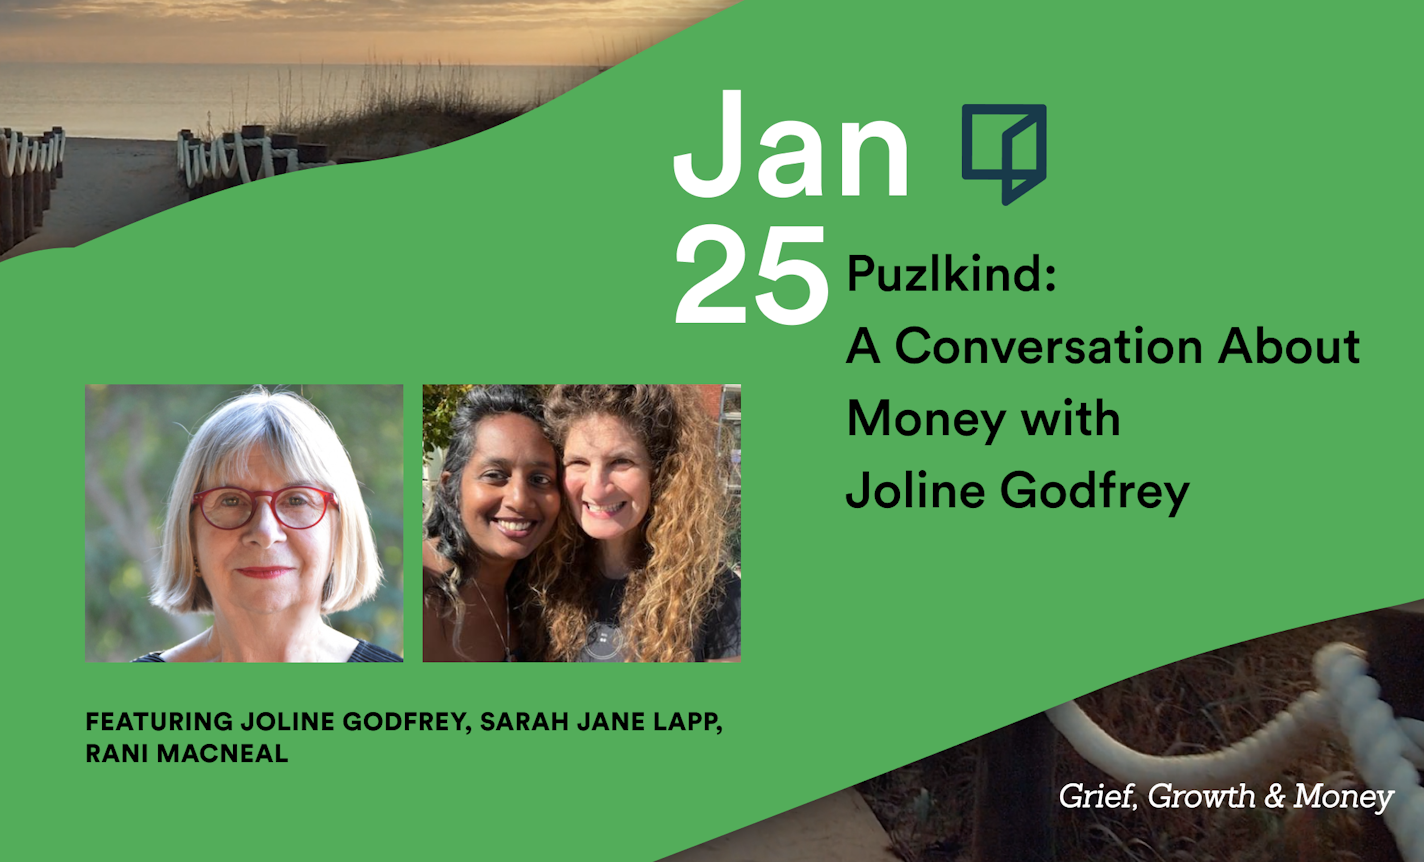 Puzlkind: A Conversation About Money with Joline Godfrey